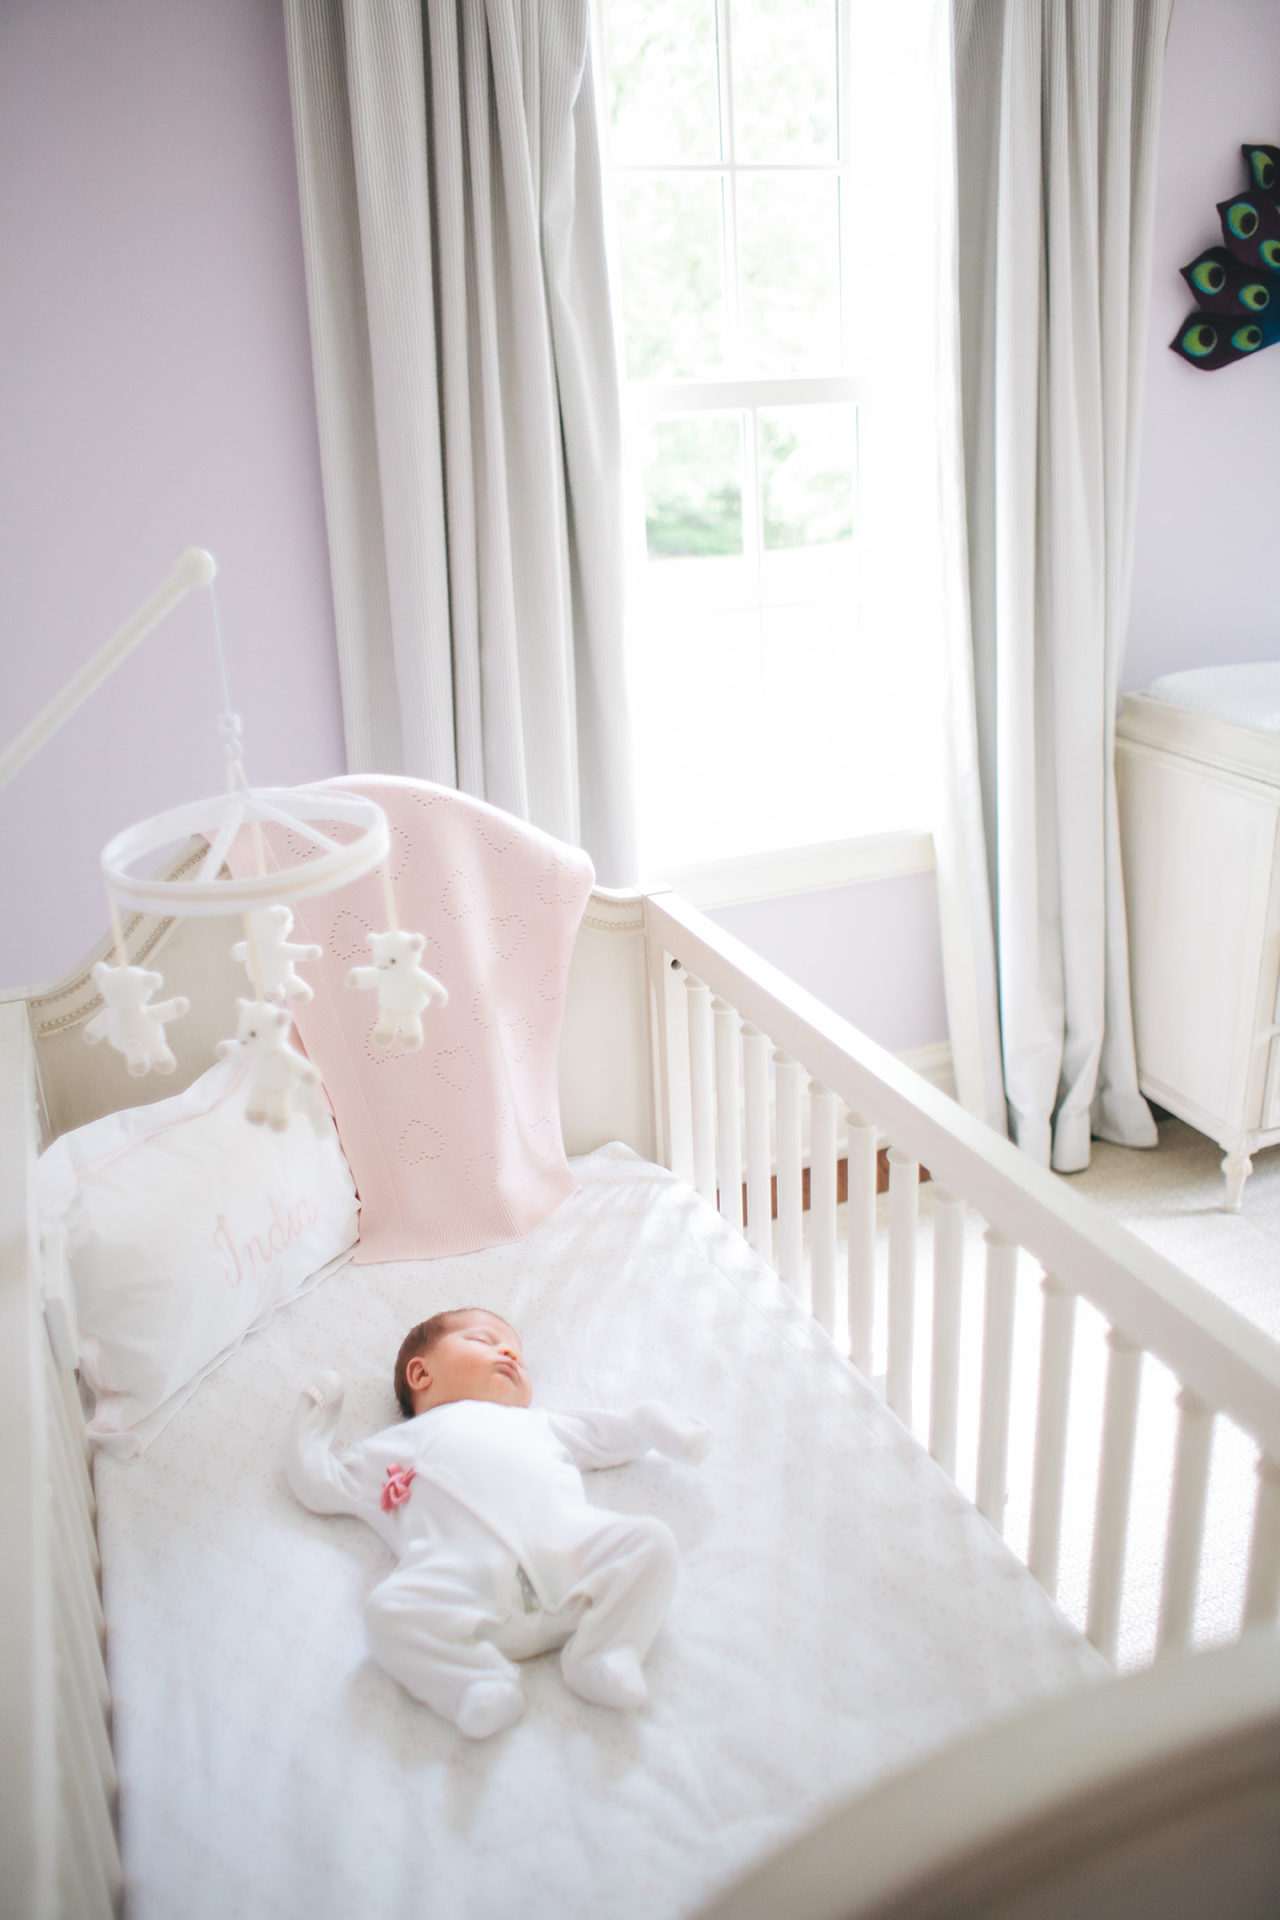 newborn baby sleeping peacefully in crib for newborn photos